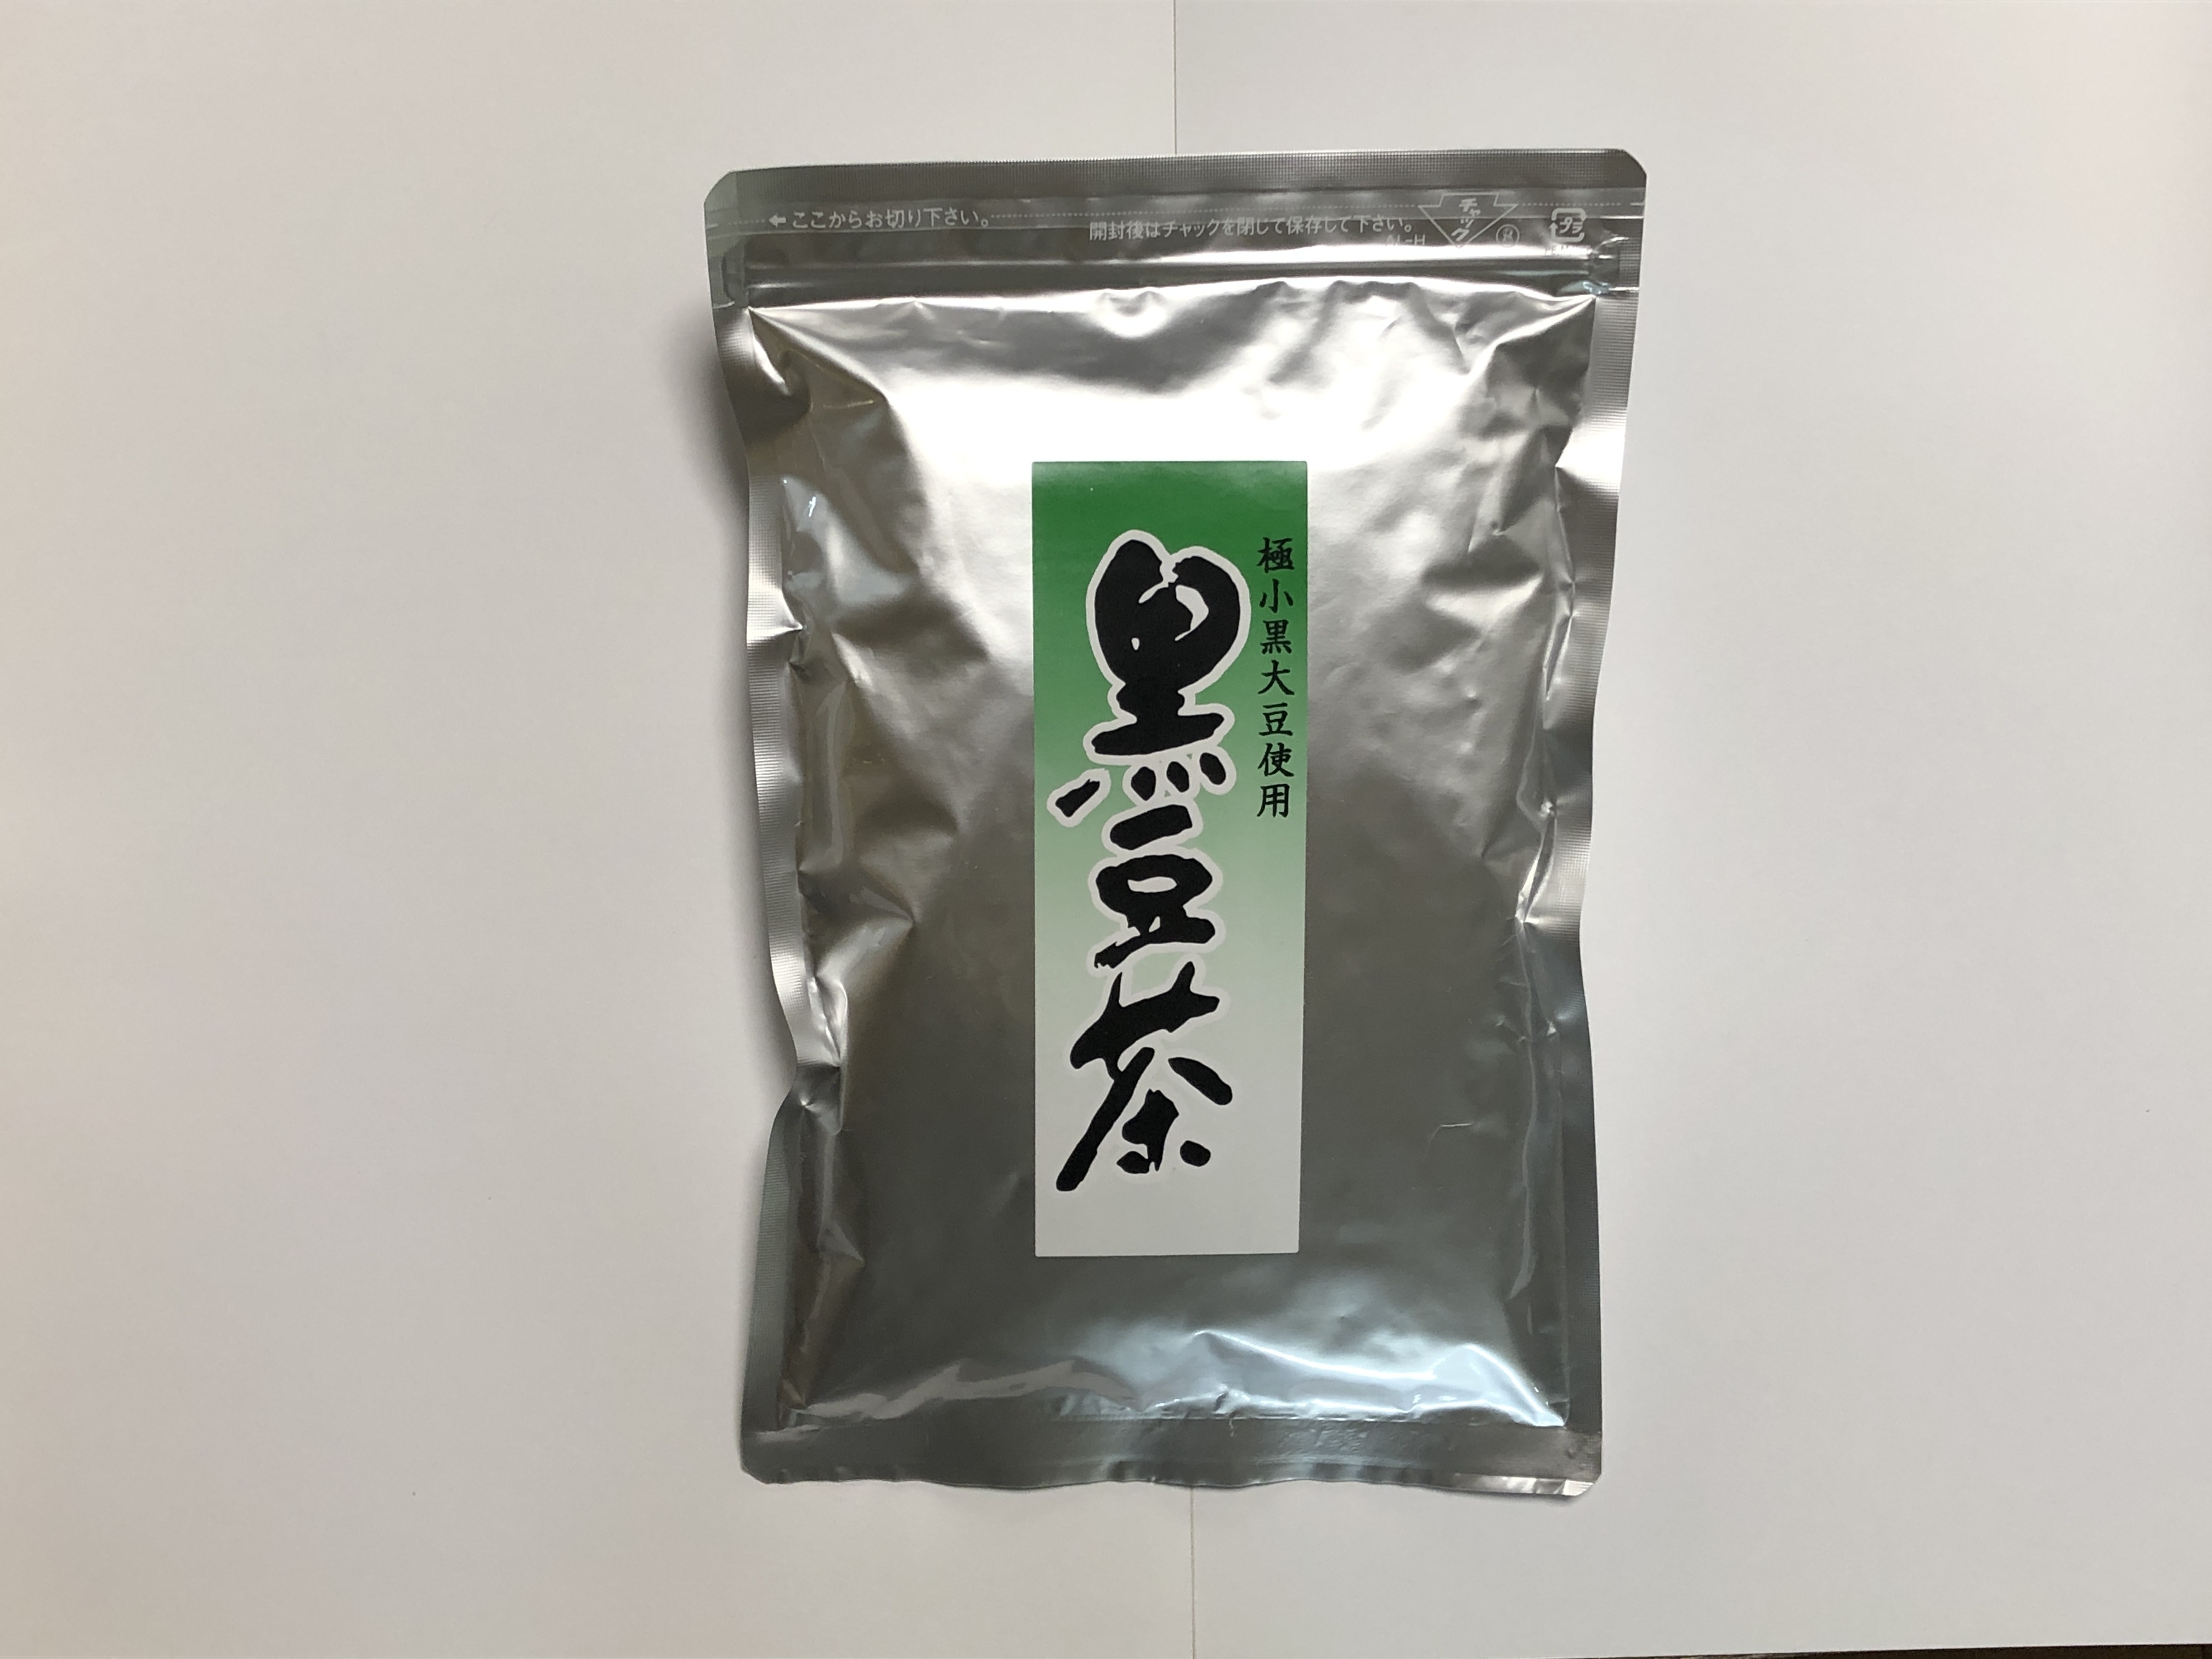 Black bean tea pack Minimal black soybean